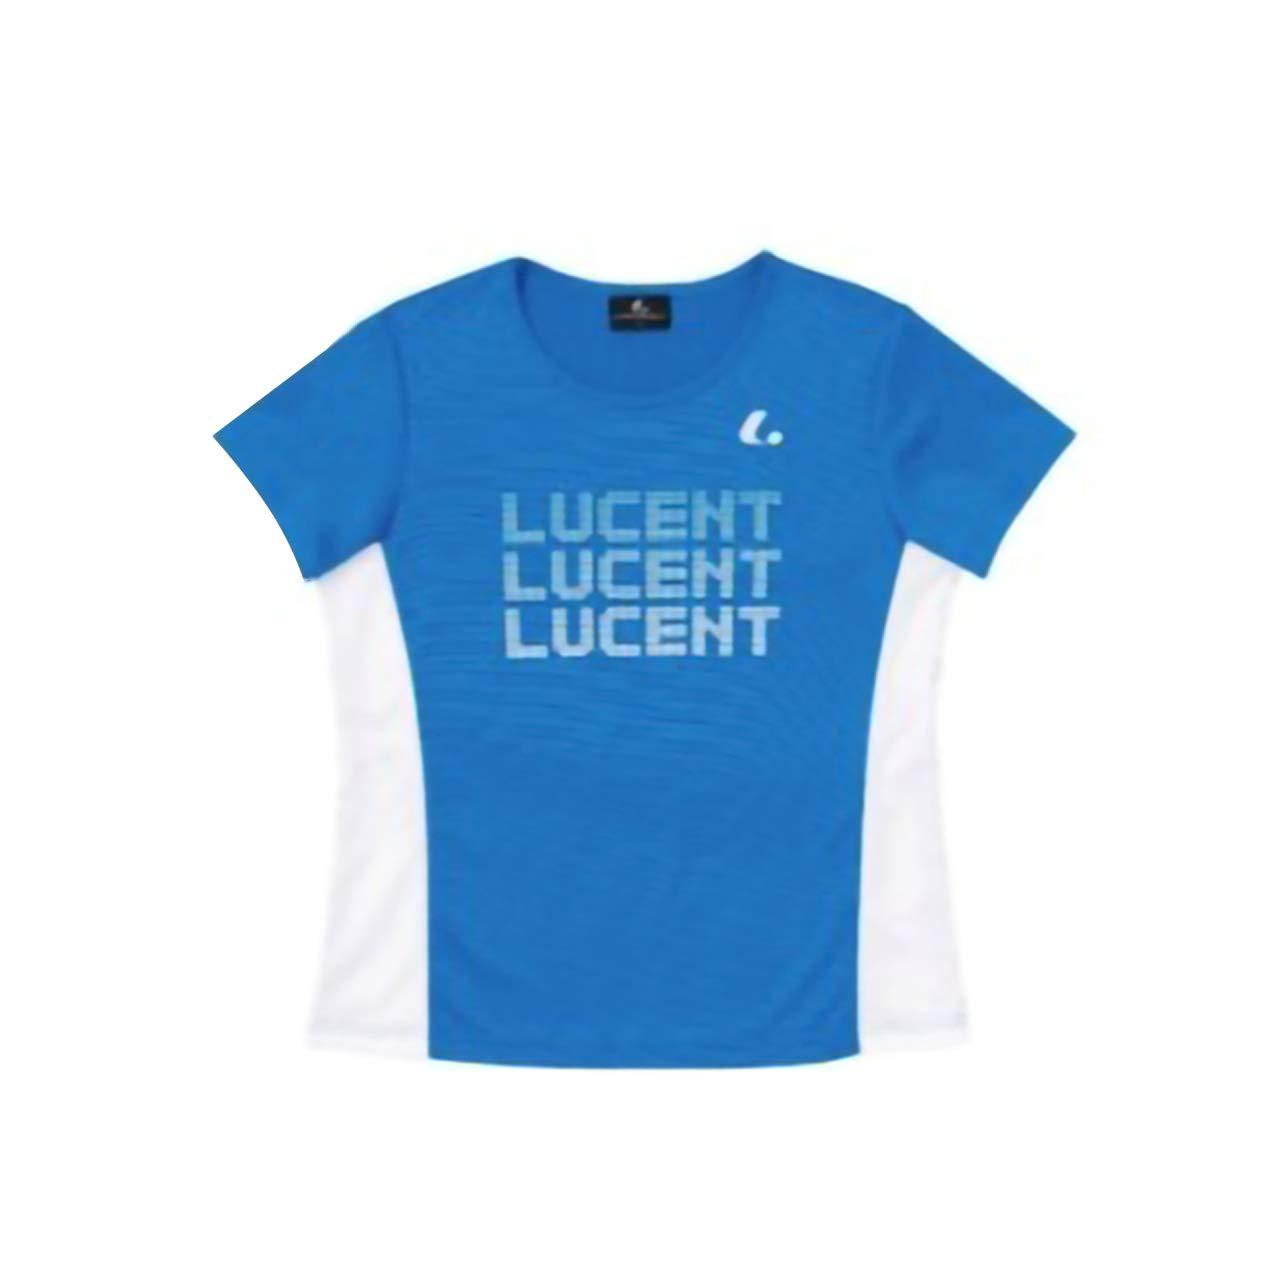 Lucent([Zg) LUCENT_TVc_W_BL (XLH2337) [F : u[] [TCY : O]